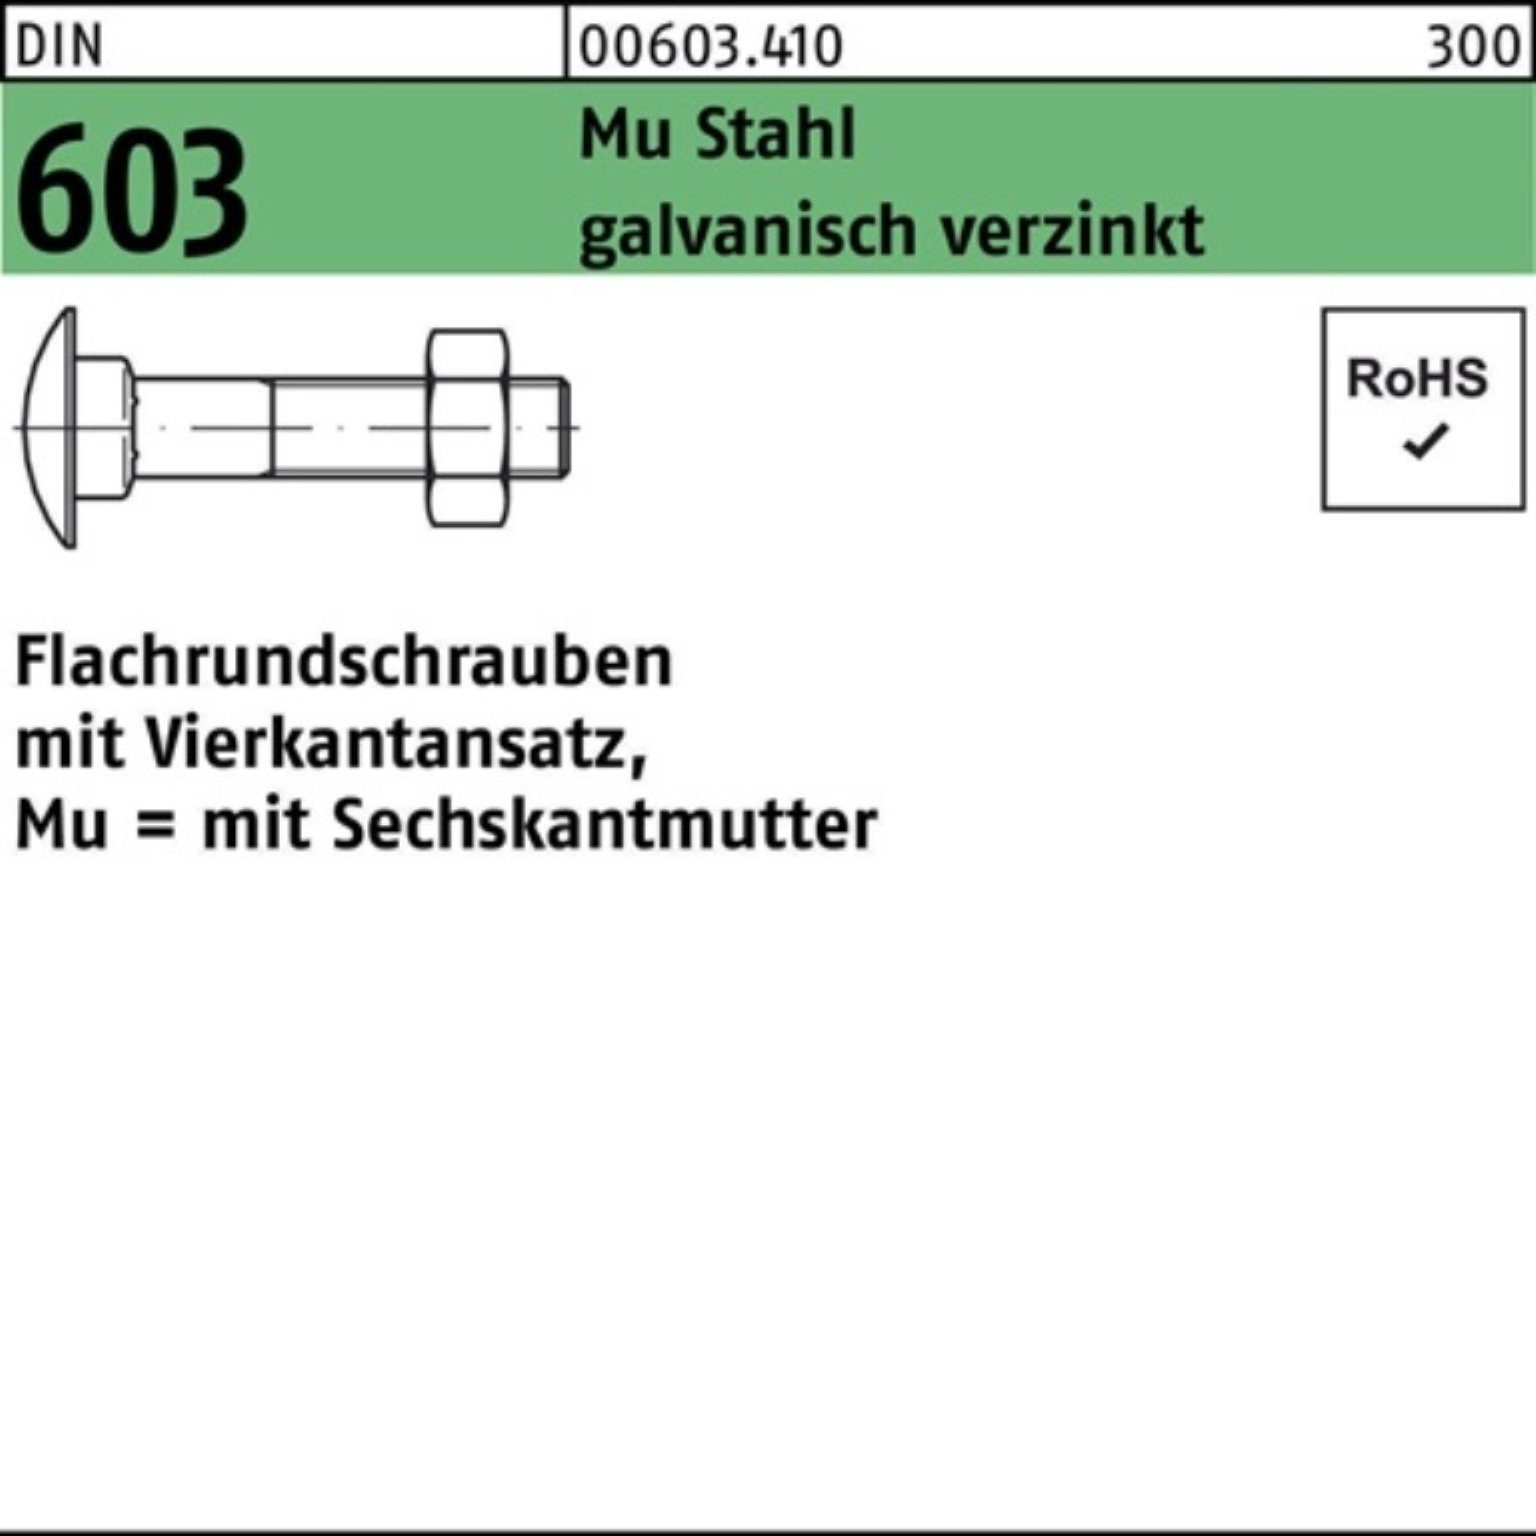 Reyher Schraube M8x90 M Flachrundschraube Pack Vierkantansatz/6-ktmutter 100er 603 DIN